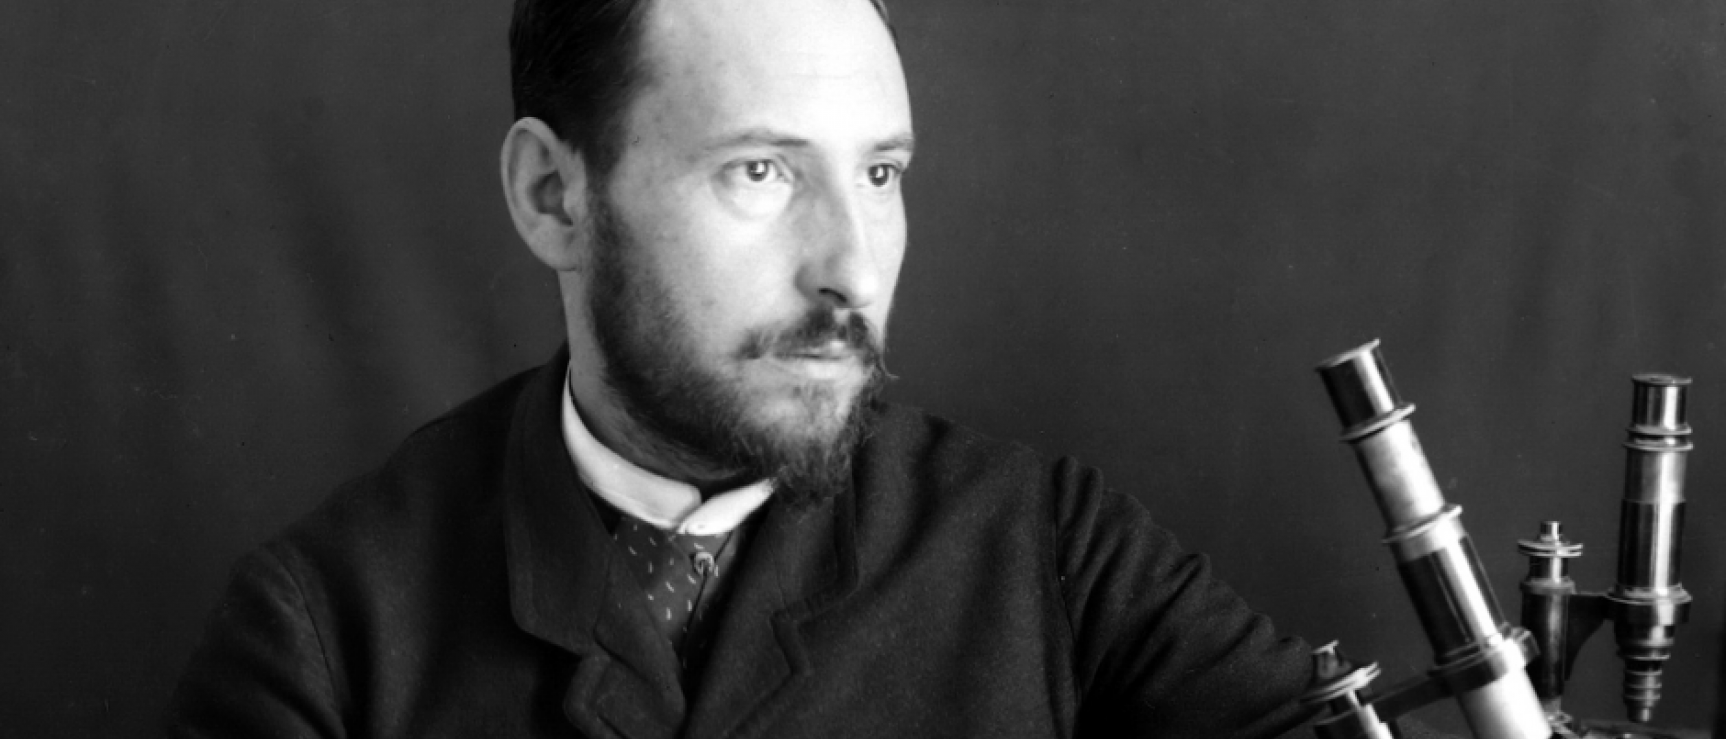 Ramón y Cajal.